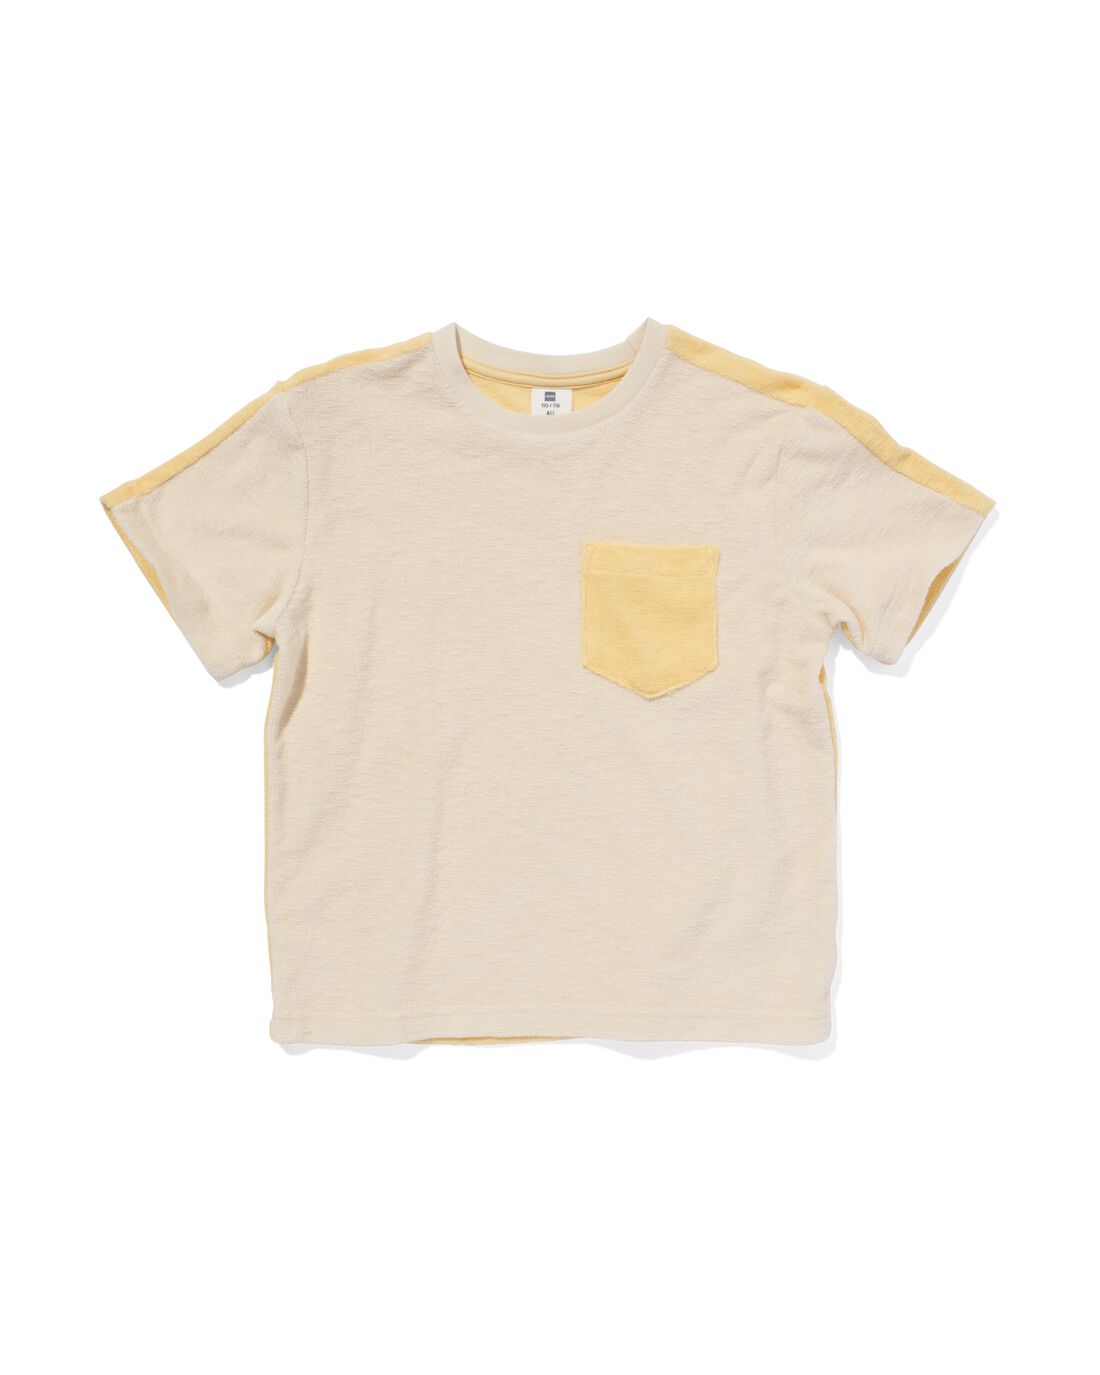 HEMA Kinder T-shirt Badstof Geel (geel)